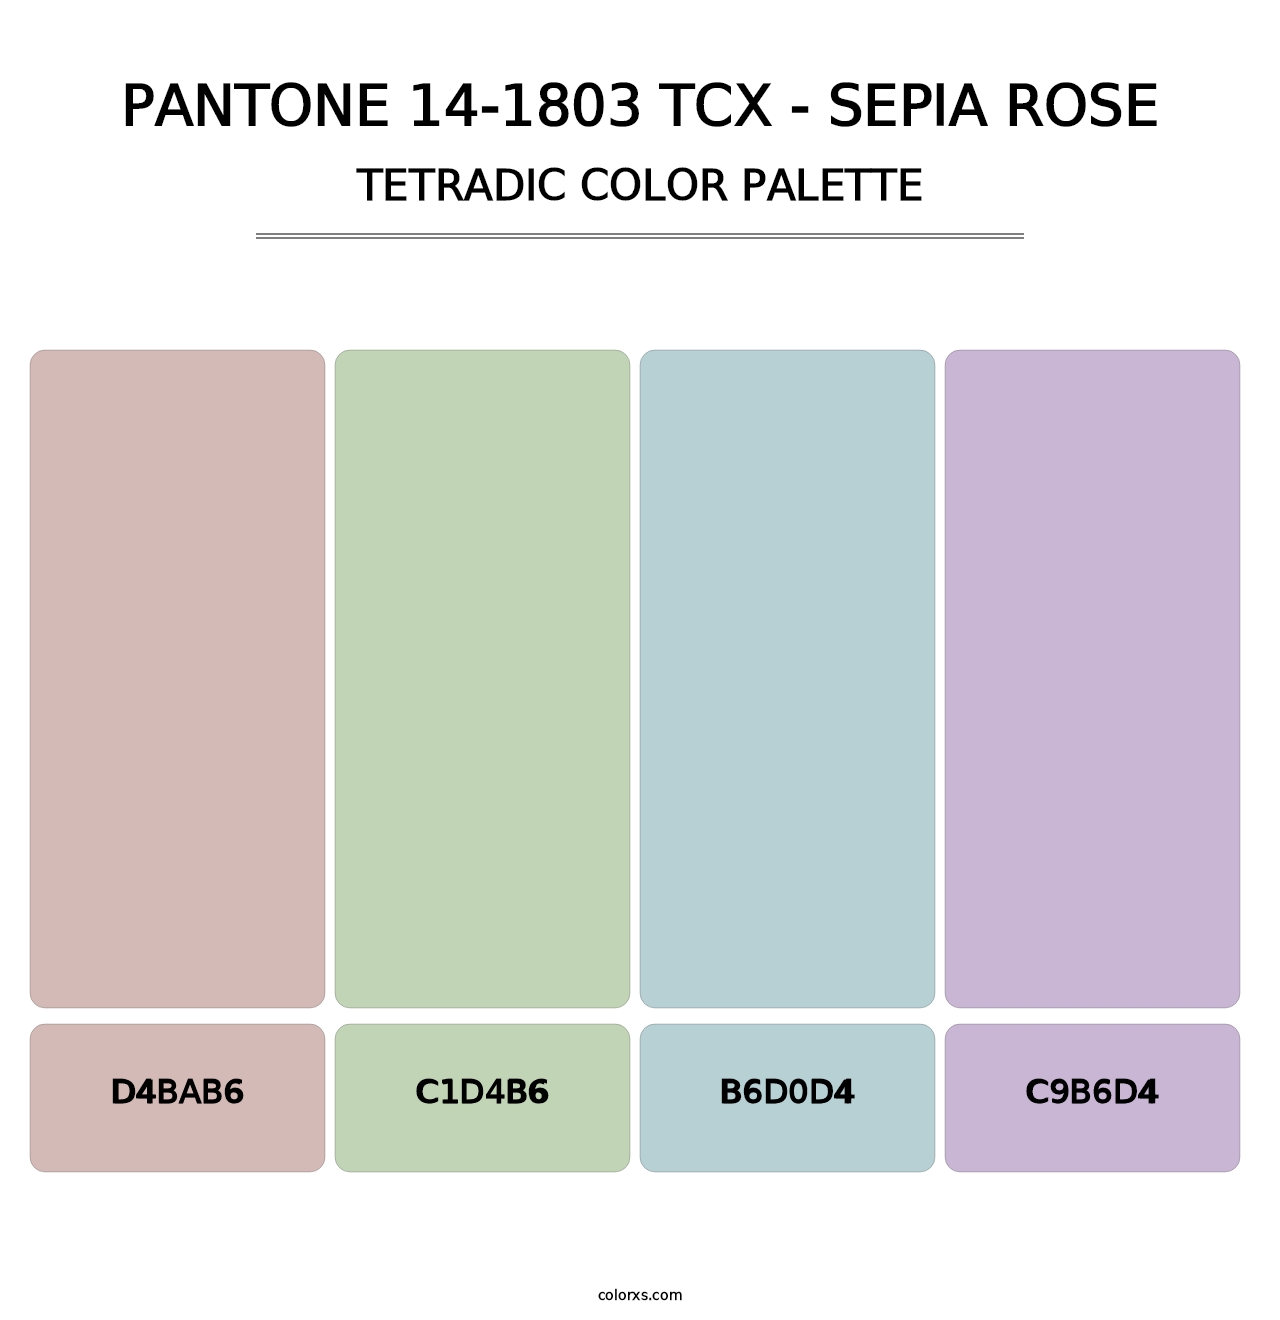 PANTONE 14-1803 TCX - Sepia Rose - Tetradic Color Palette